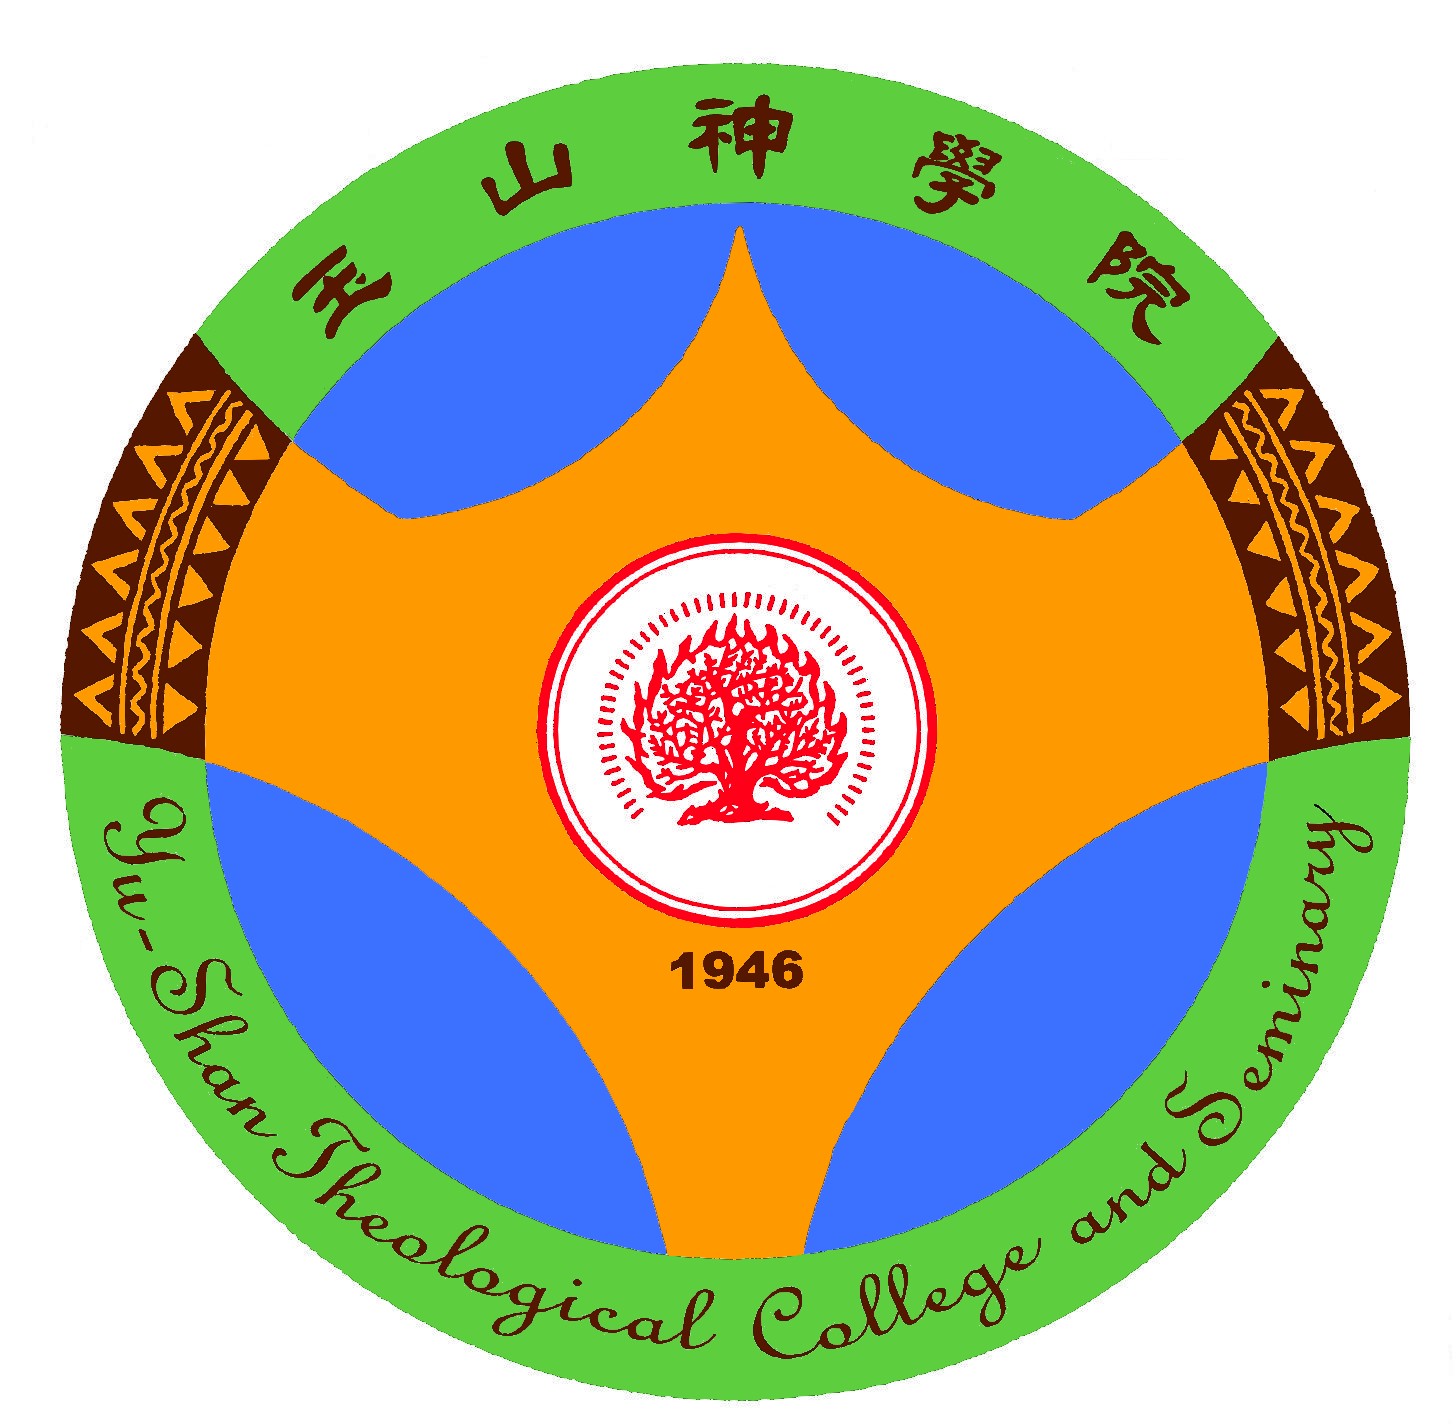 Logo02